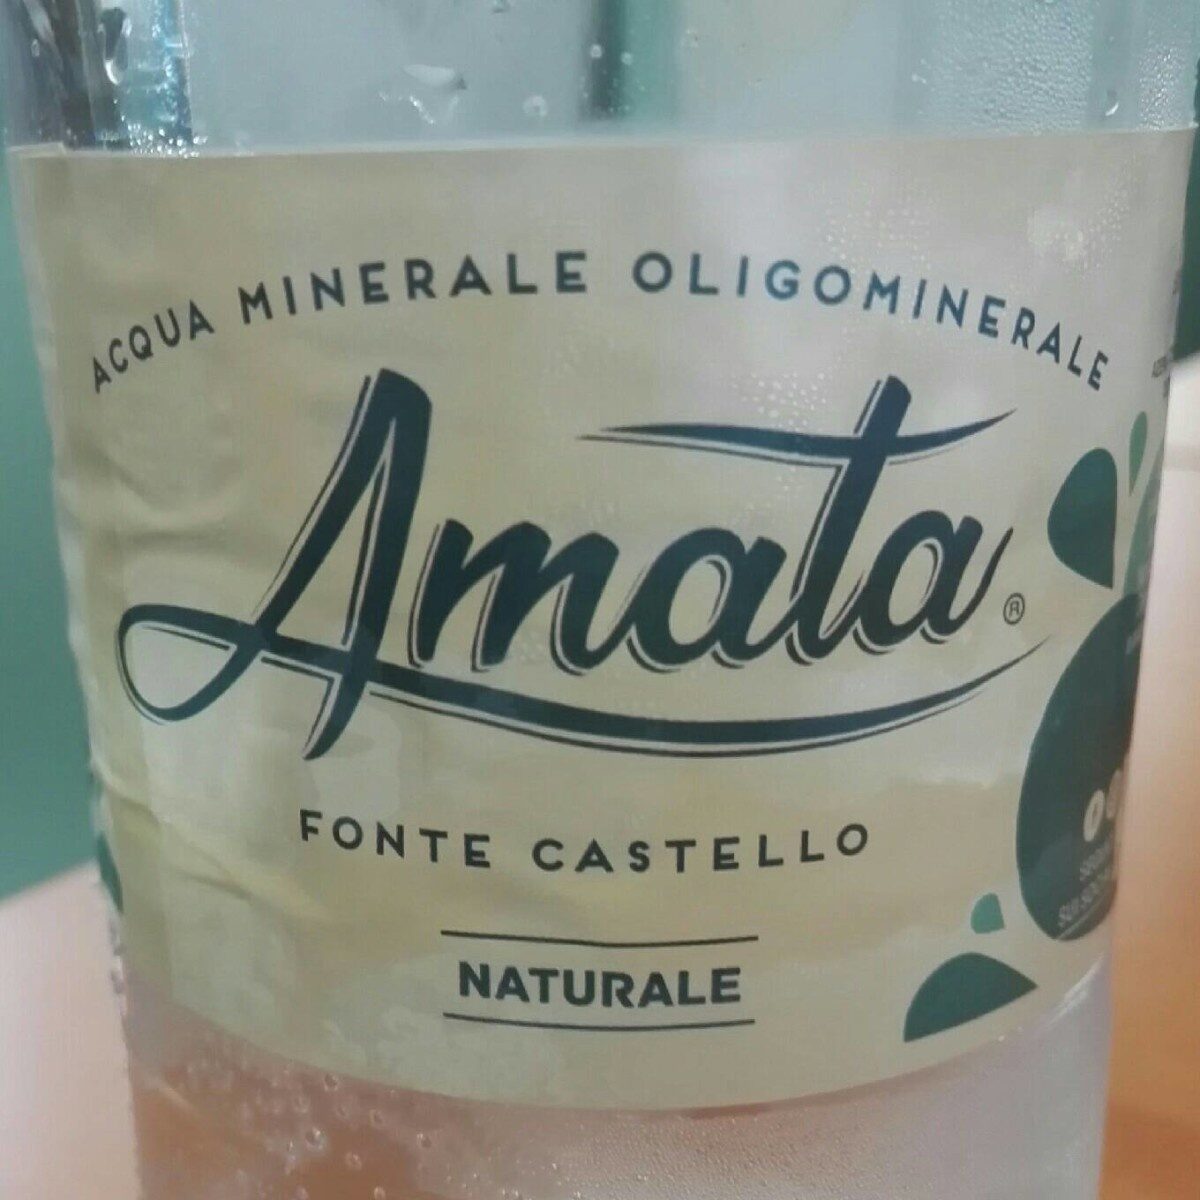 Acqua Amata - Produit